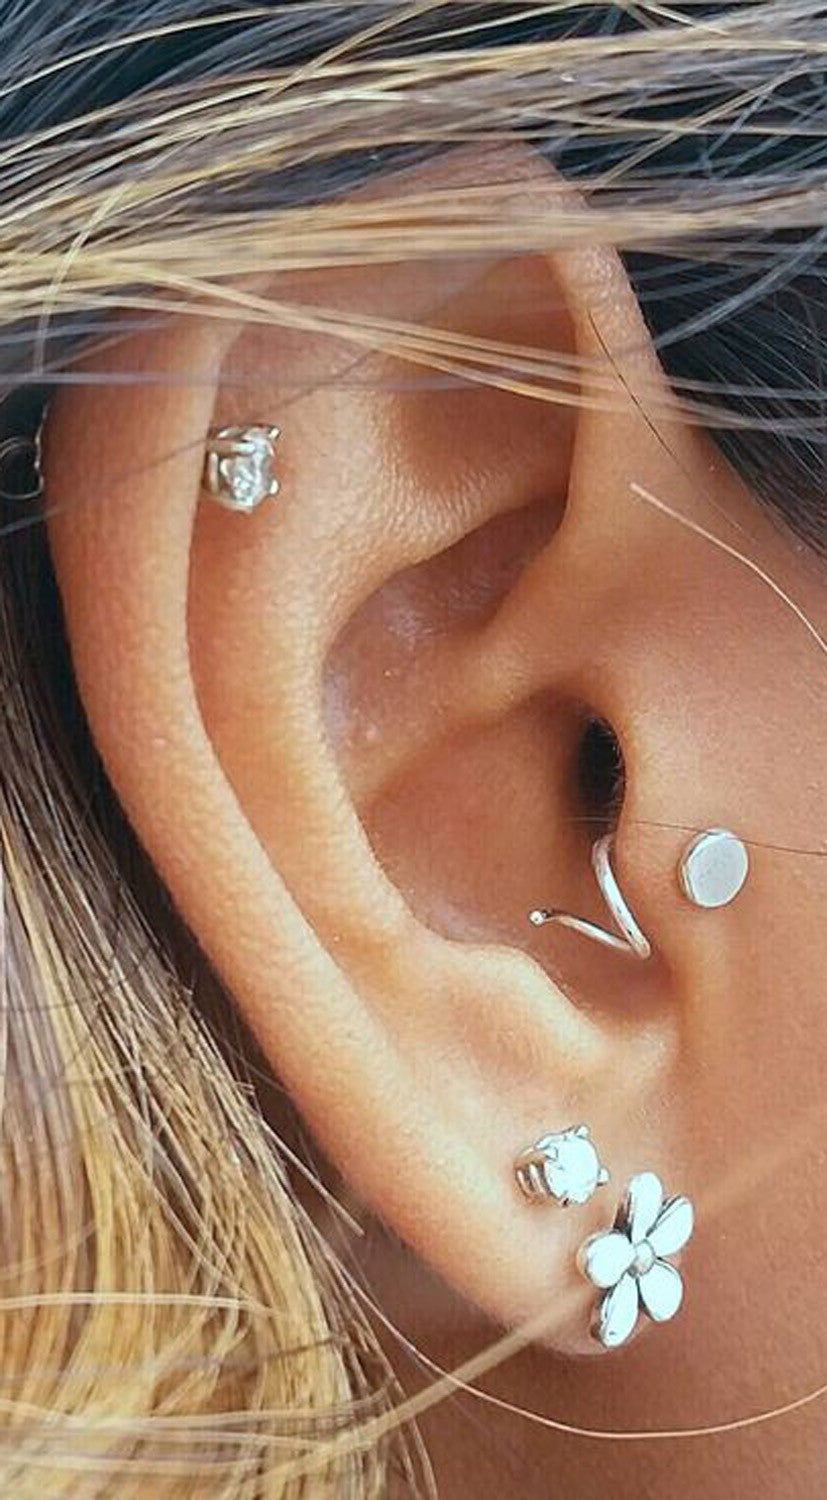 Multiple Ear Piercing Ideas at MyBodiArt.com - Tragus Spiral Swirl Hoop Earring - Crystal Cartilage Piercing Stud